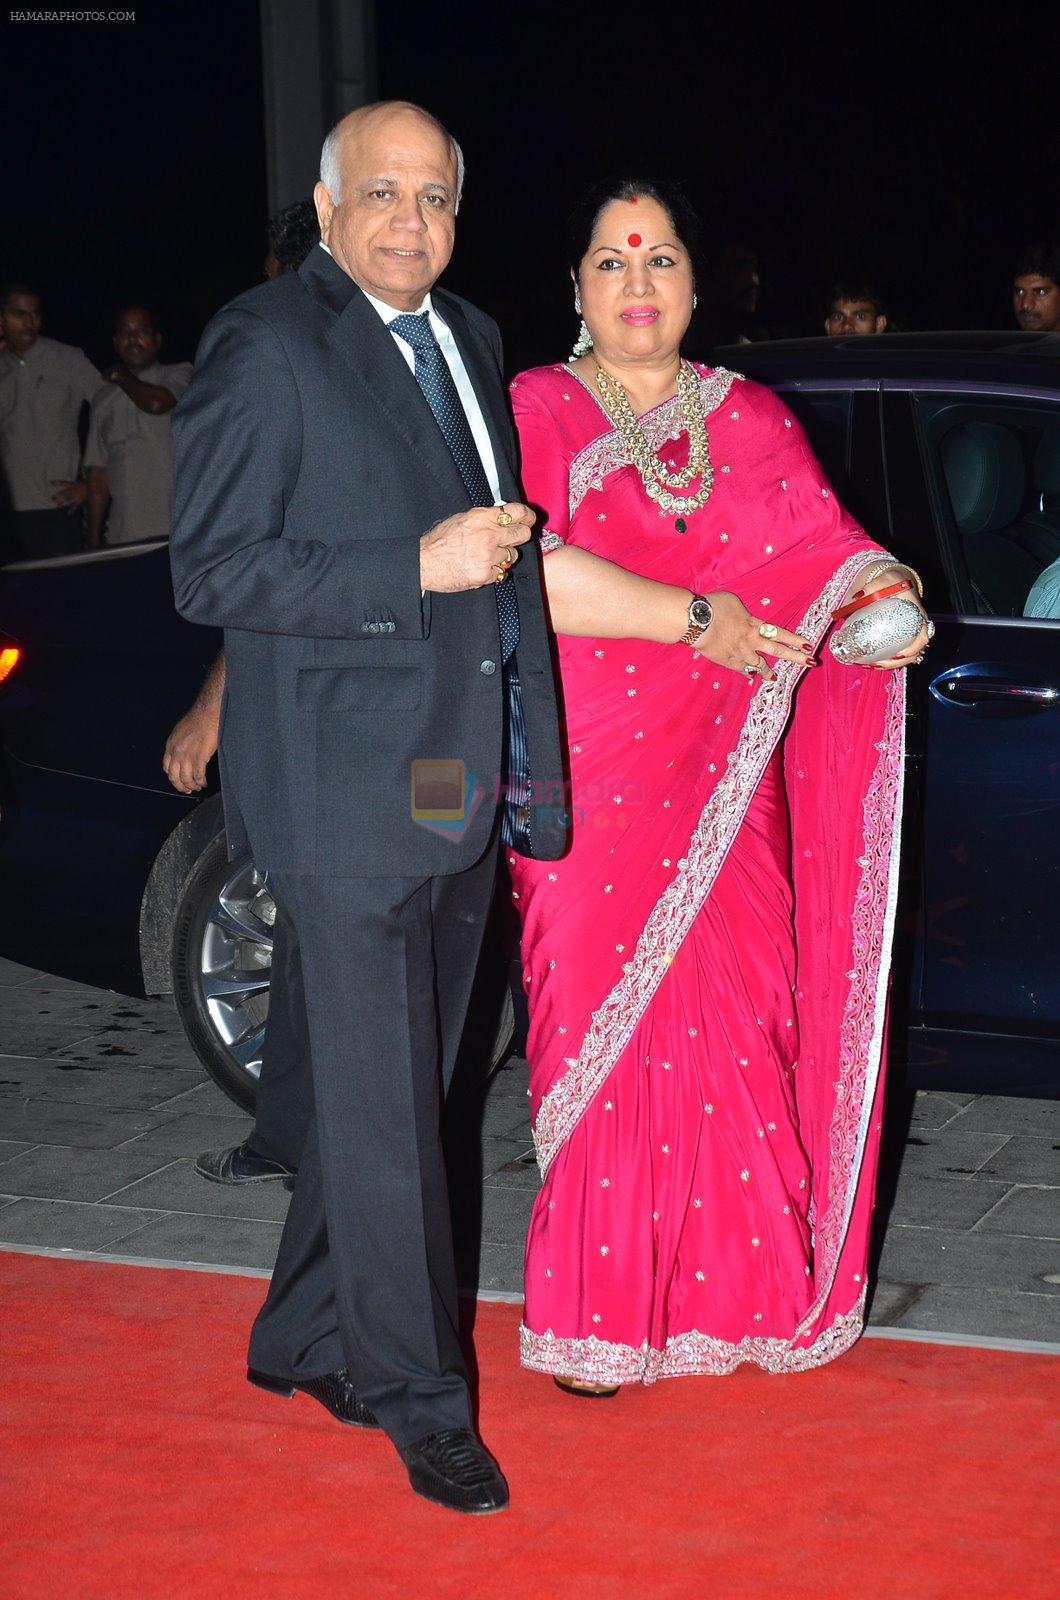 Sunanda Shetty at Kush Wedding Reception in Sahara Star, Mumbai on 19th Jan 2015